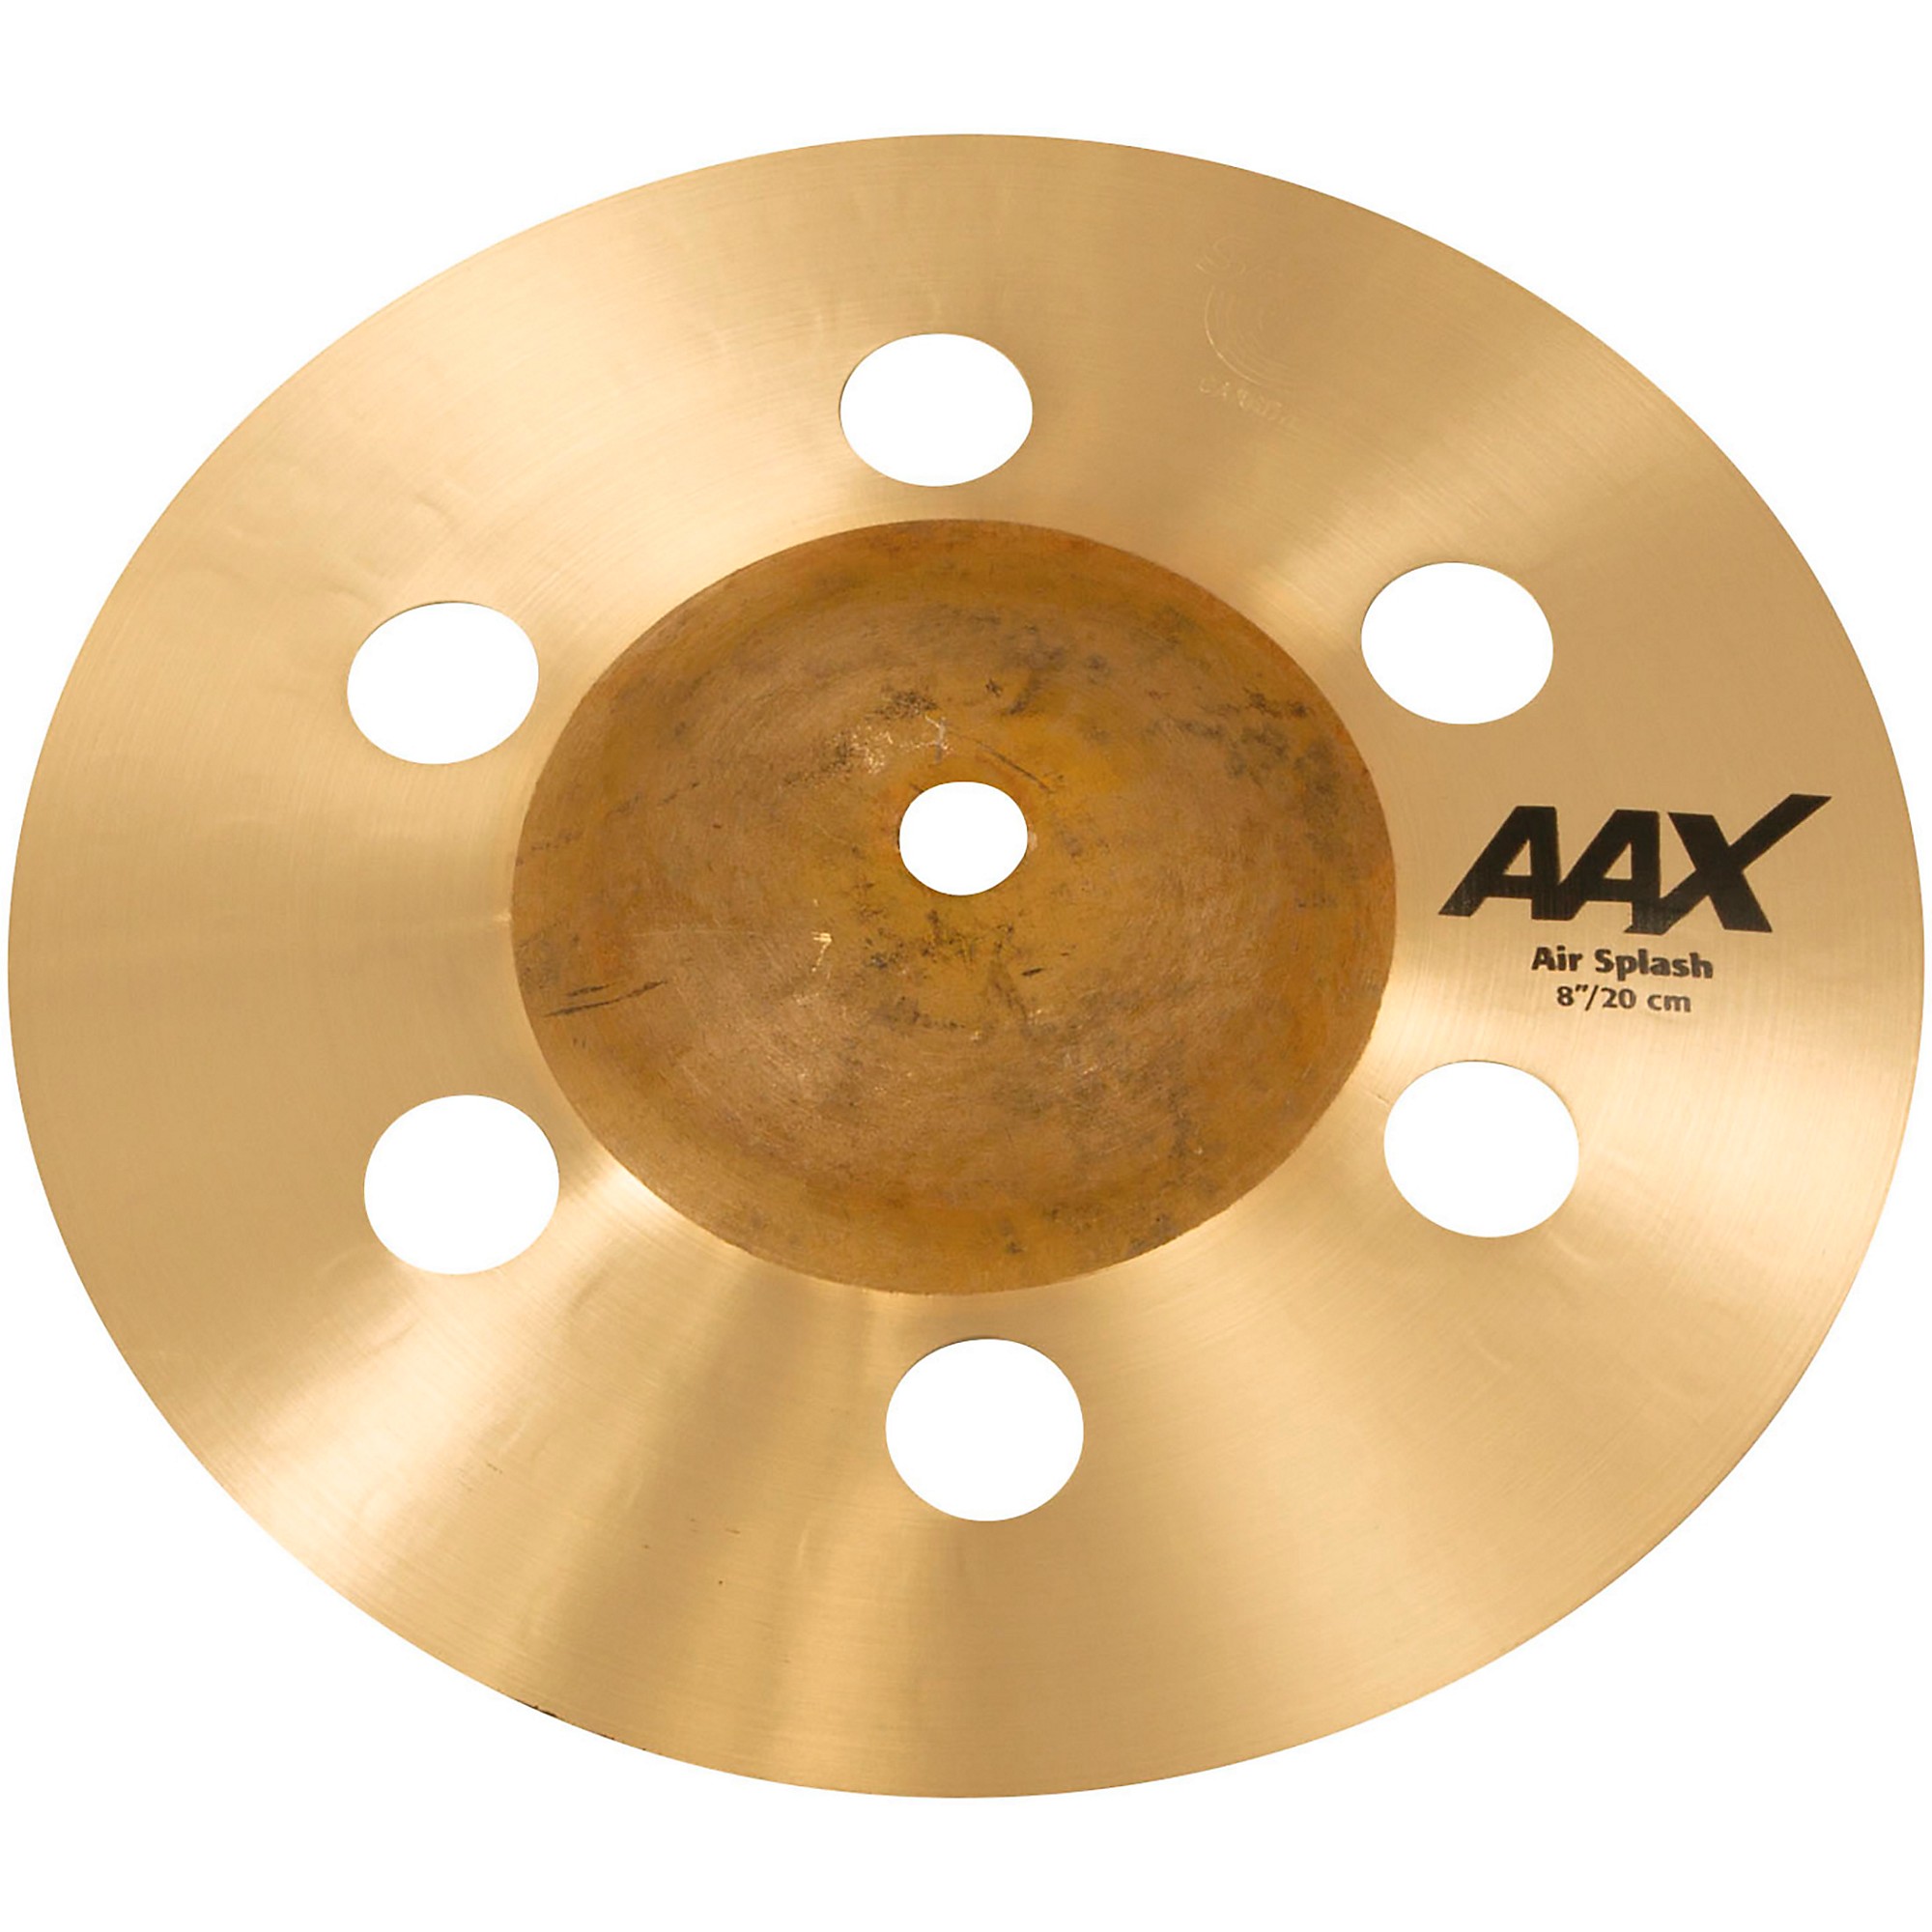 SABIAN AAX Air Splash Cymbal | Music & Arts